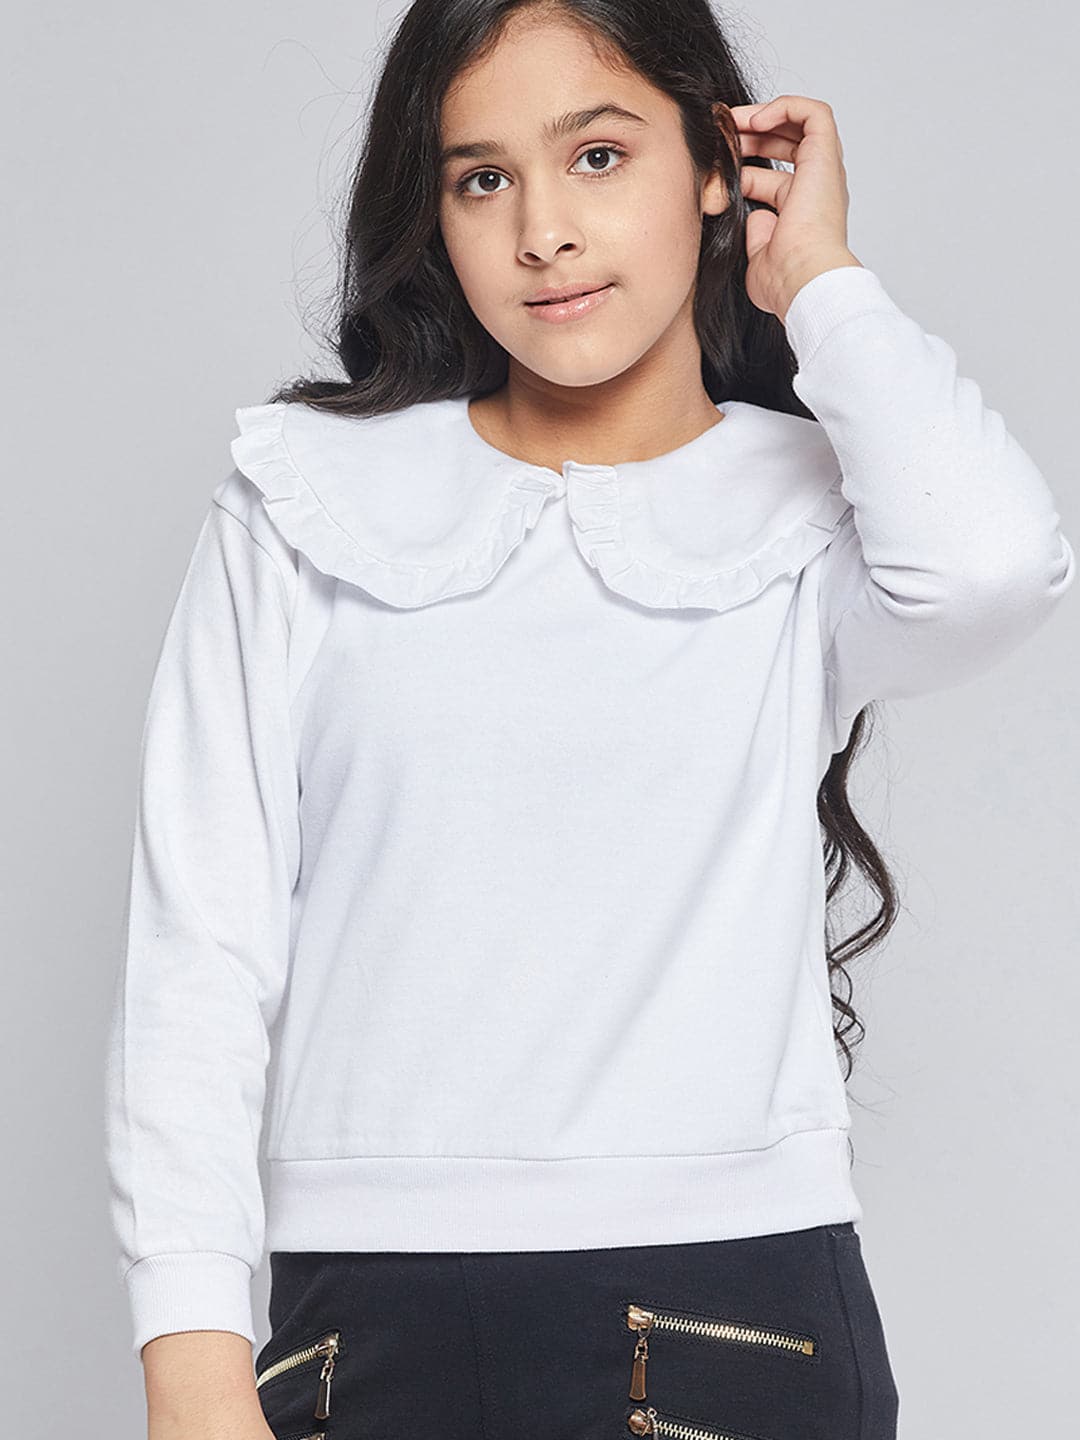 Girls White Fleece Puritan Collar Sweatshirt - Lyush Kids